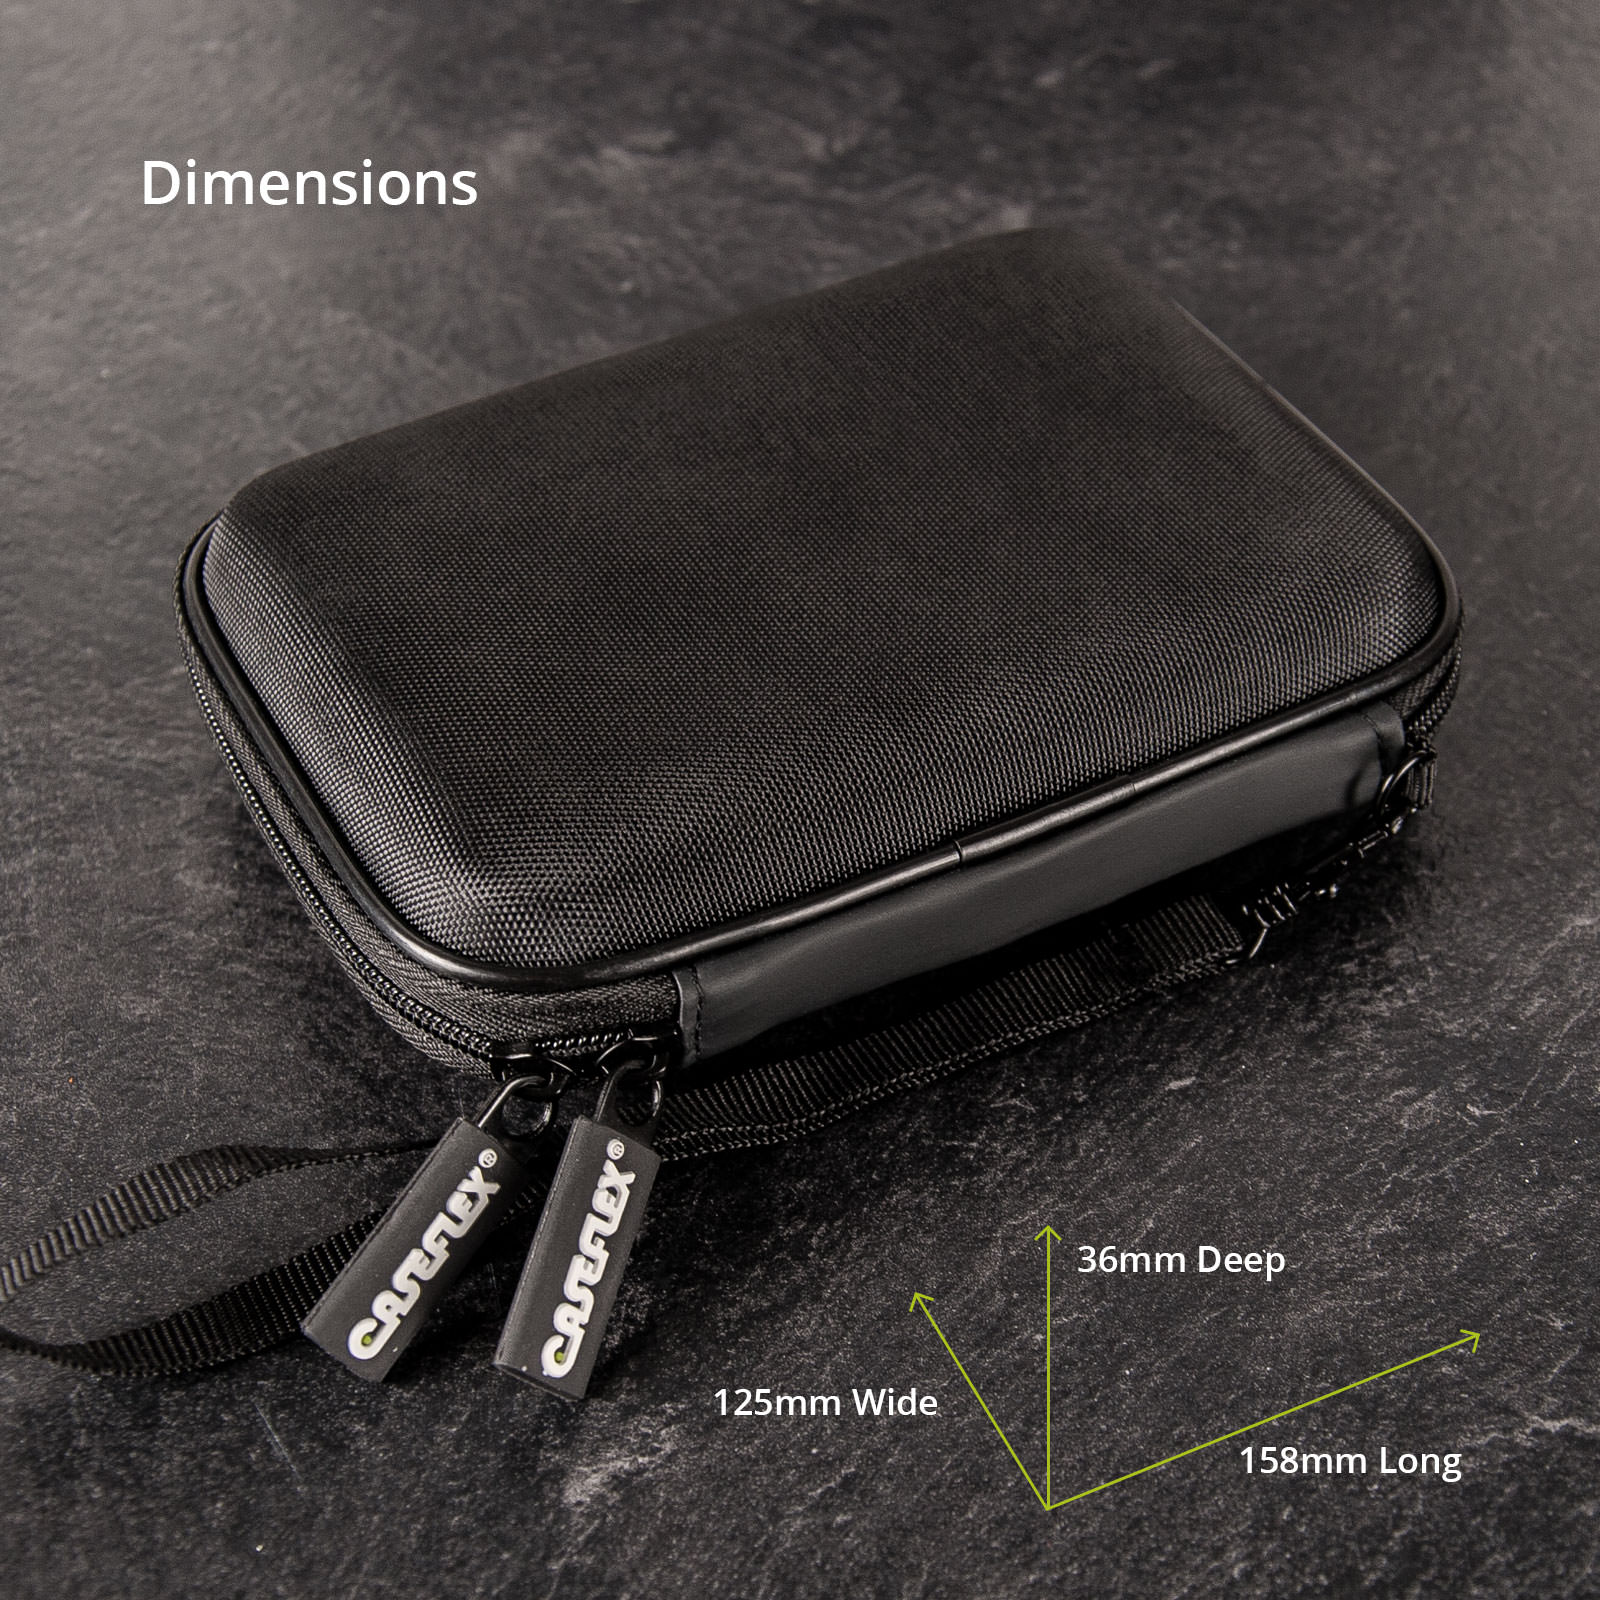 Caseflex Shockproof Hard Drive Case for 2.5 inch Portable External Hard Drives - Black